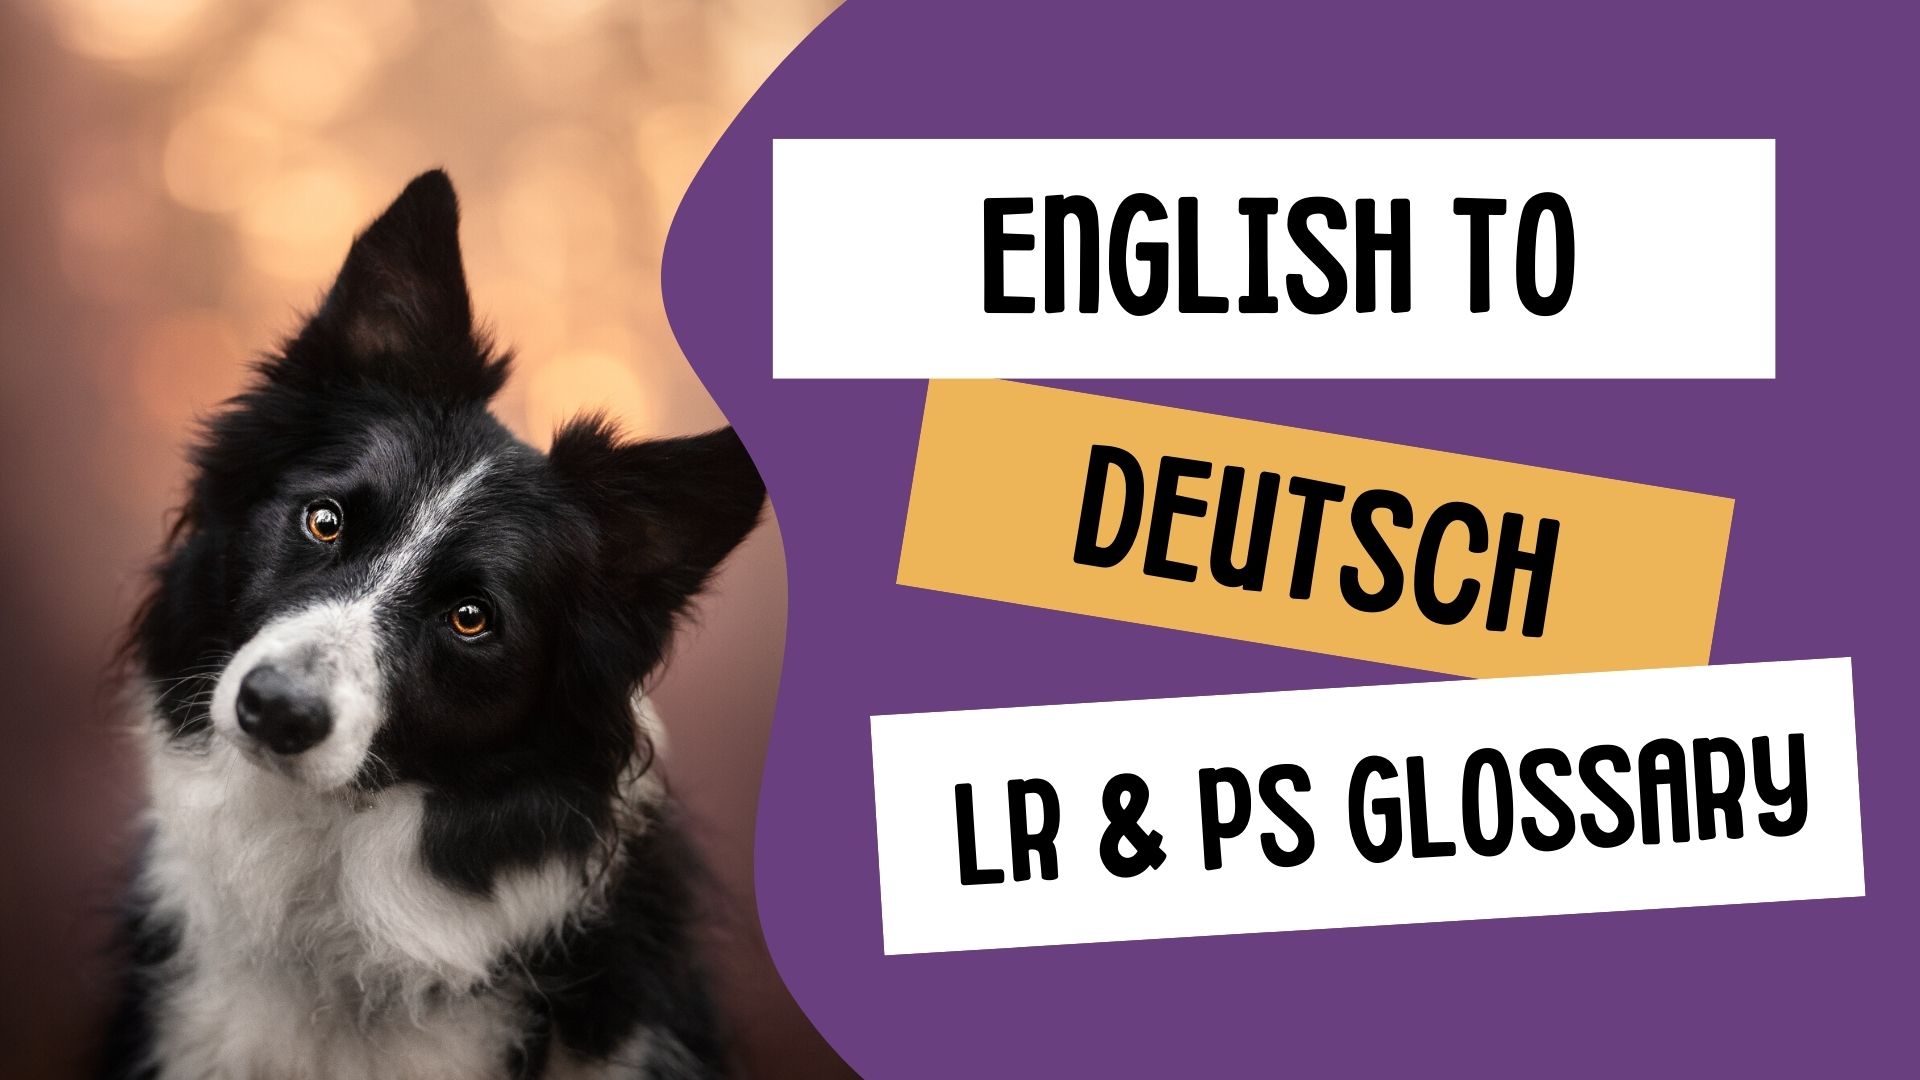 English to German Photoshop Glossary